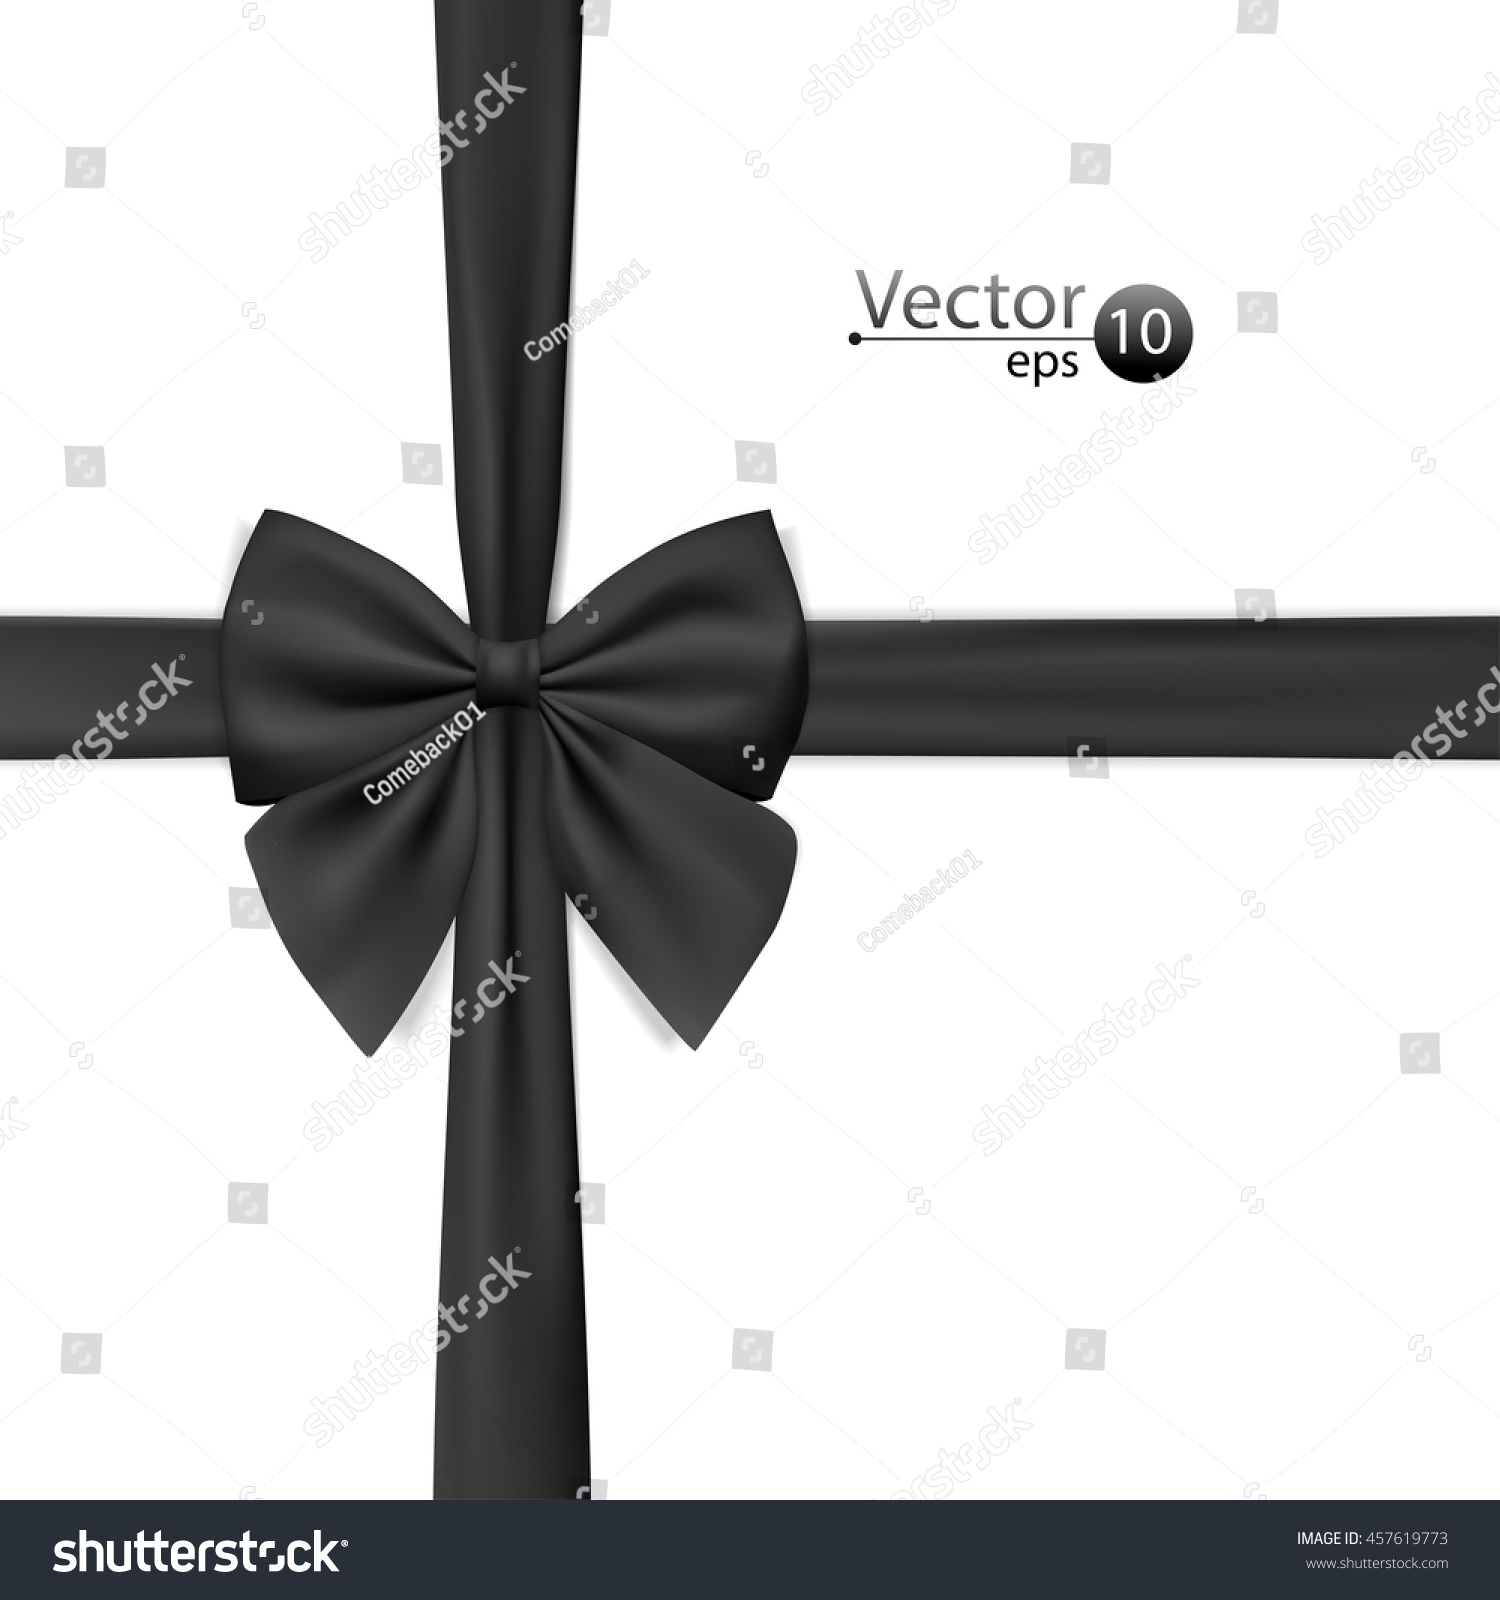 Black Bow Vector Stock Vector (Royalty Free) 457619773 - Shutterstock